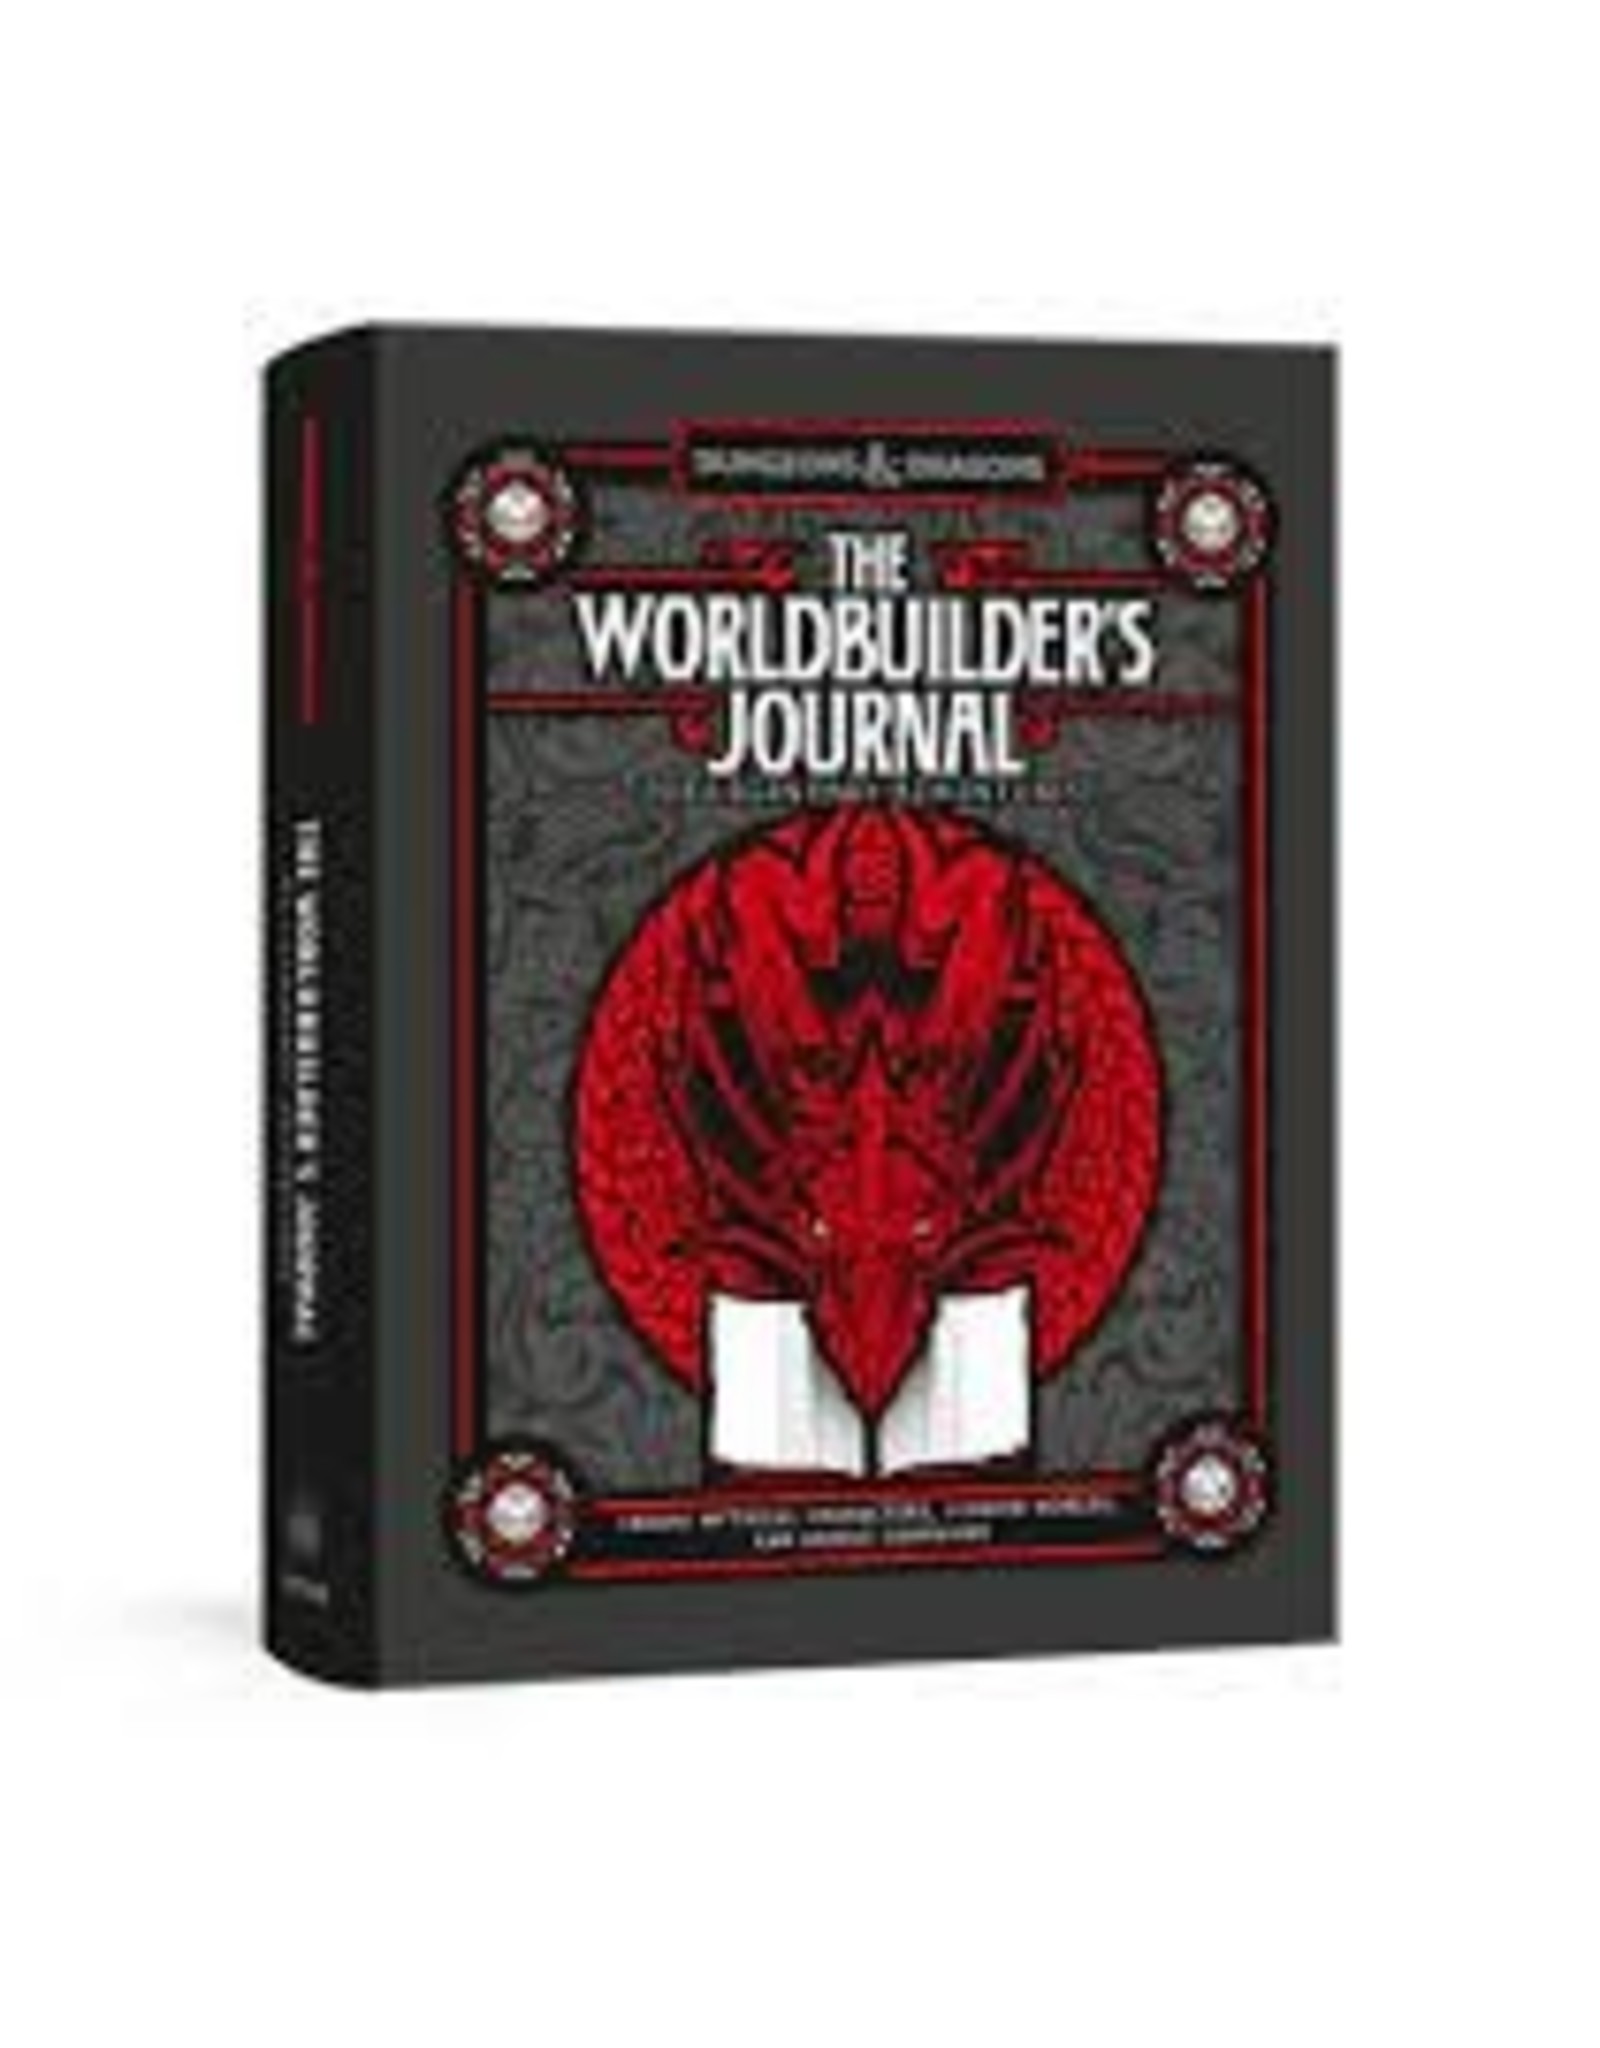 Random House Dungeons & Dragons: The Worldbuilder's Journal of Legendary Adventures